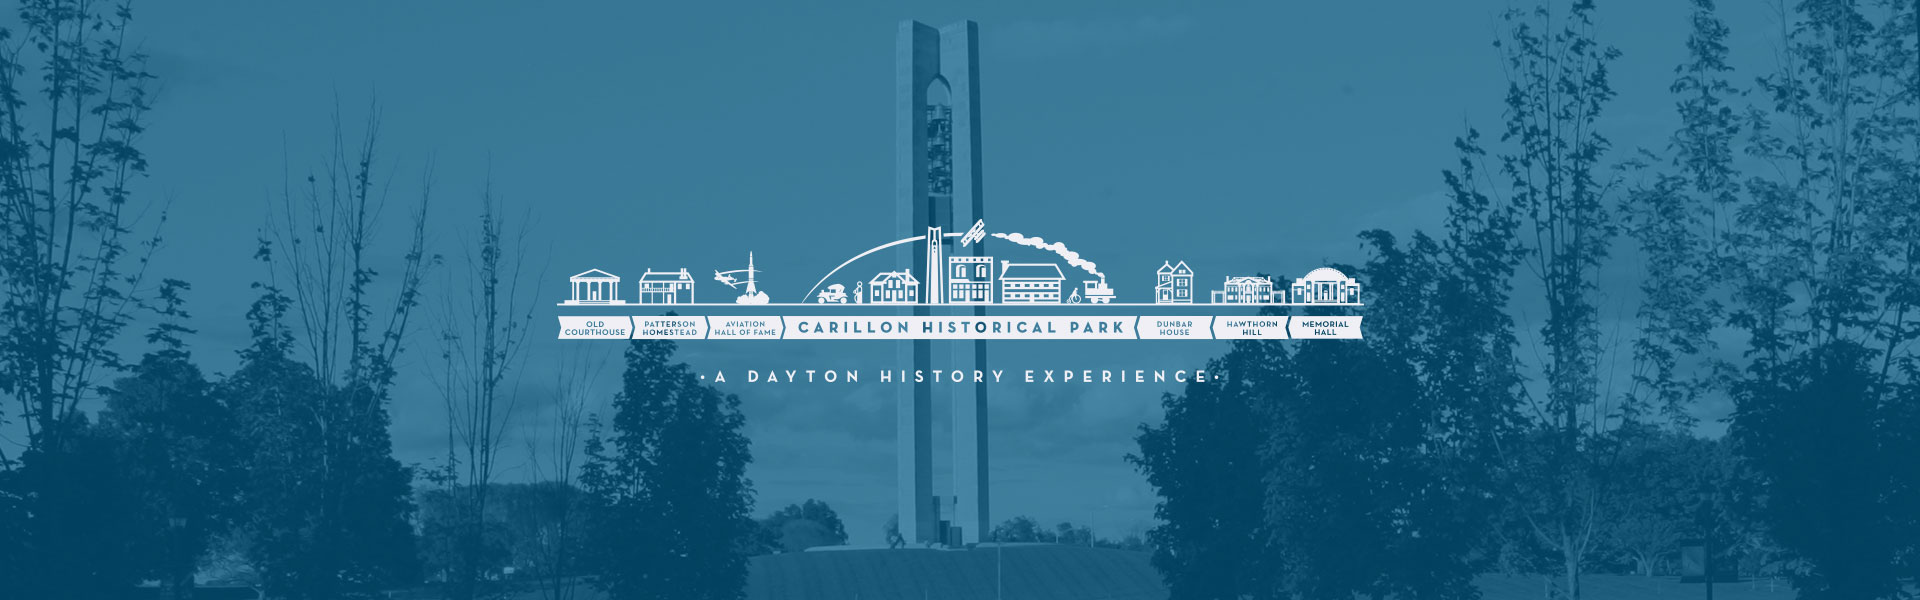 Dayton History and Carillon Park